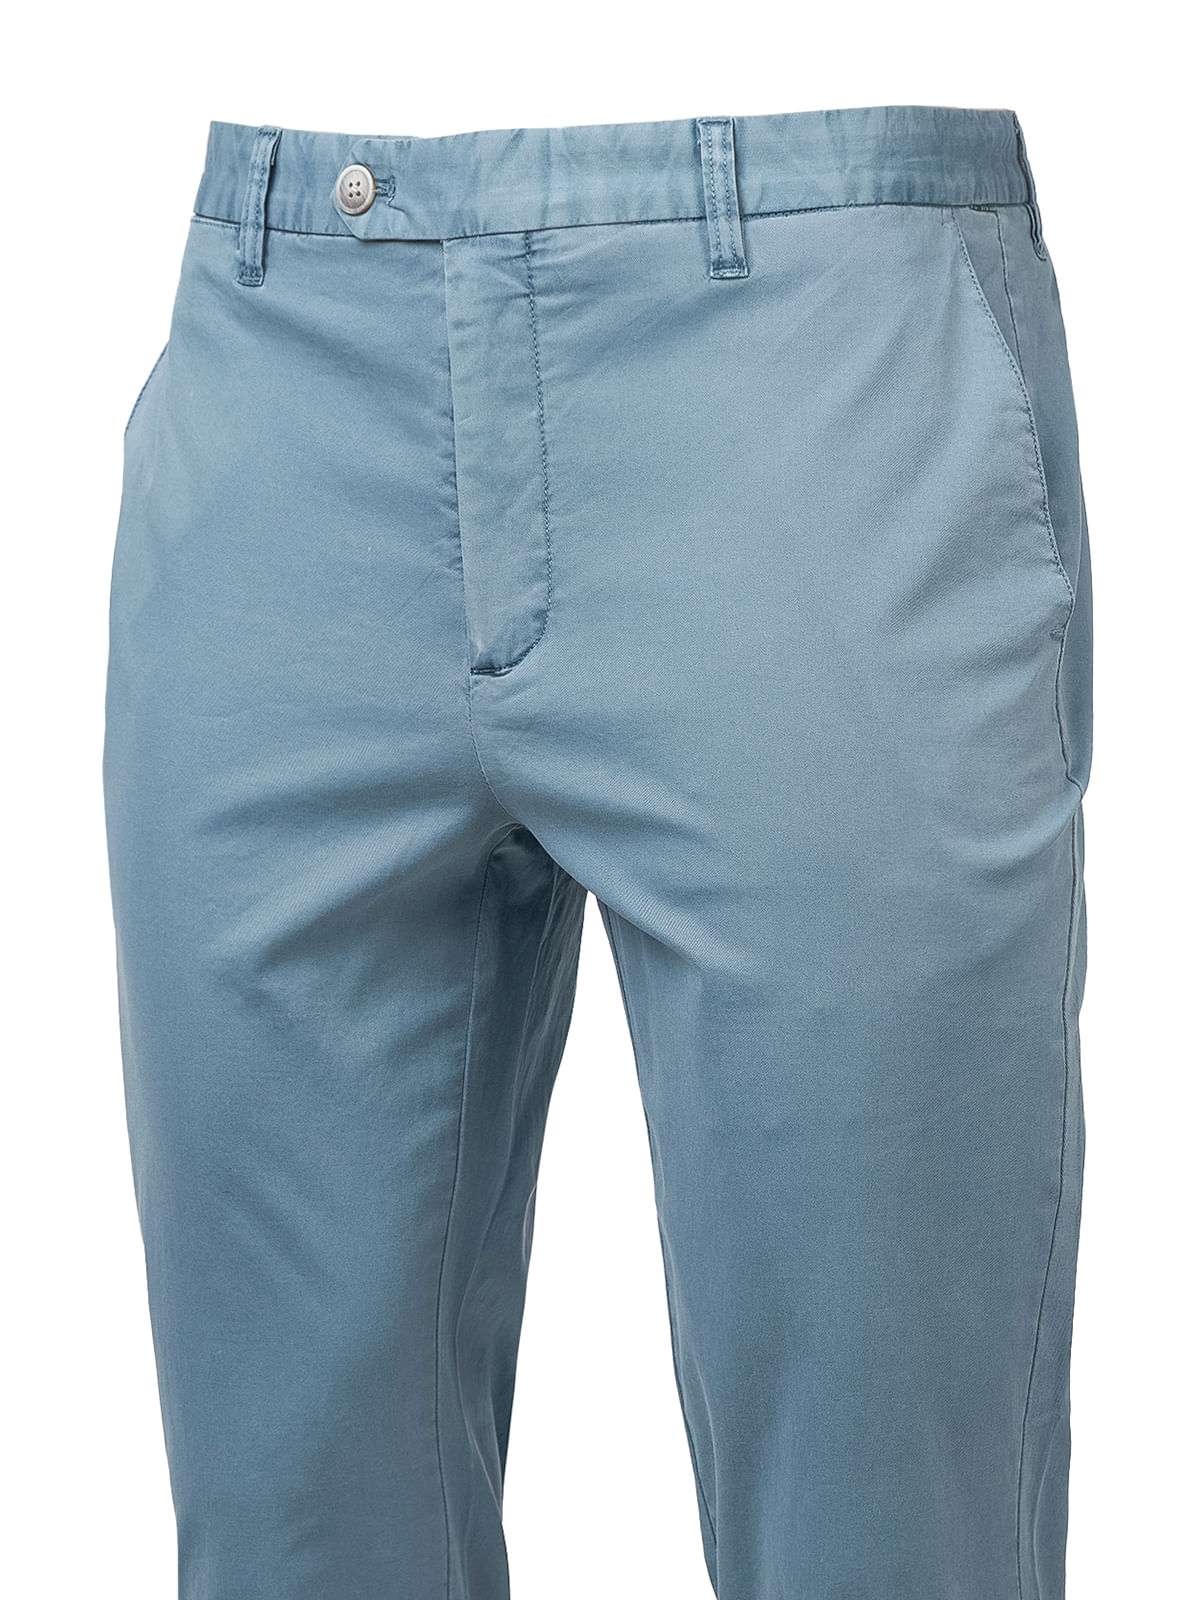 Pantalon Hombre Cotton Jogger-Merrell Chile - Rockford Chile